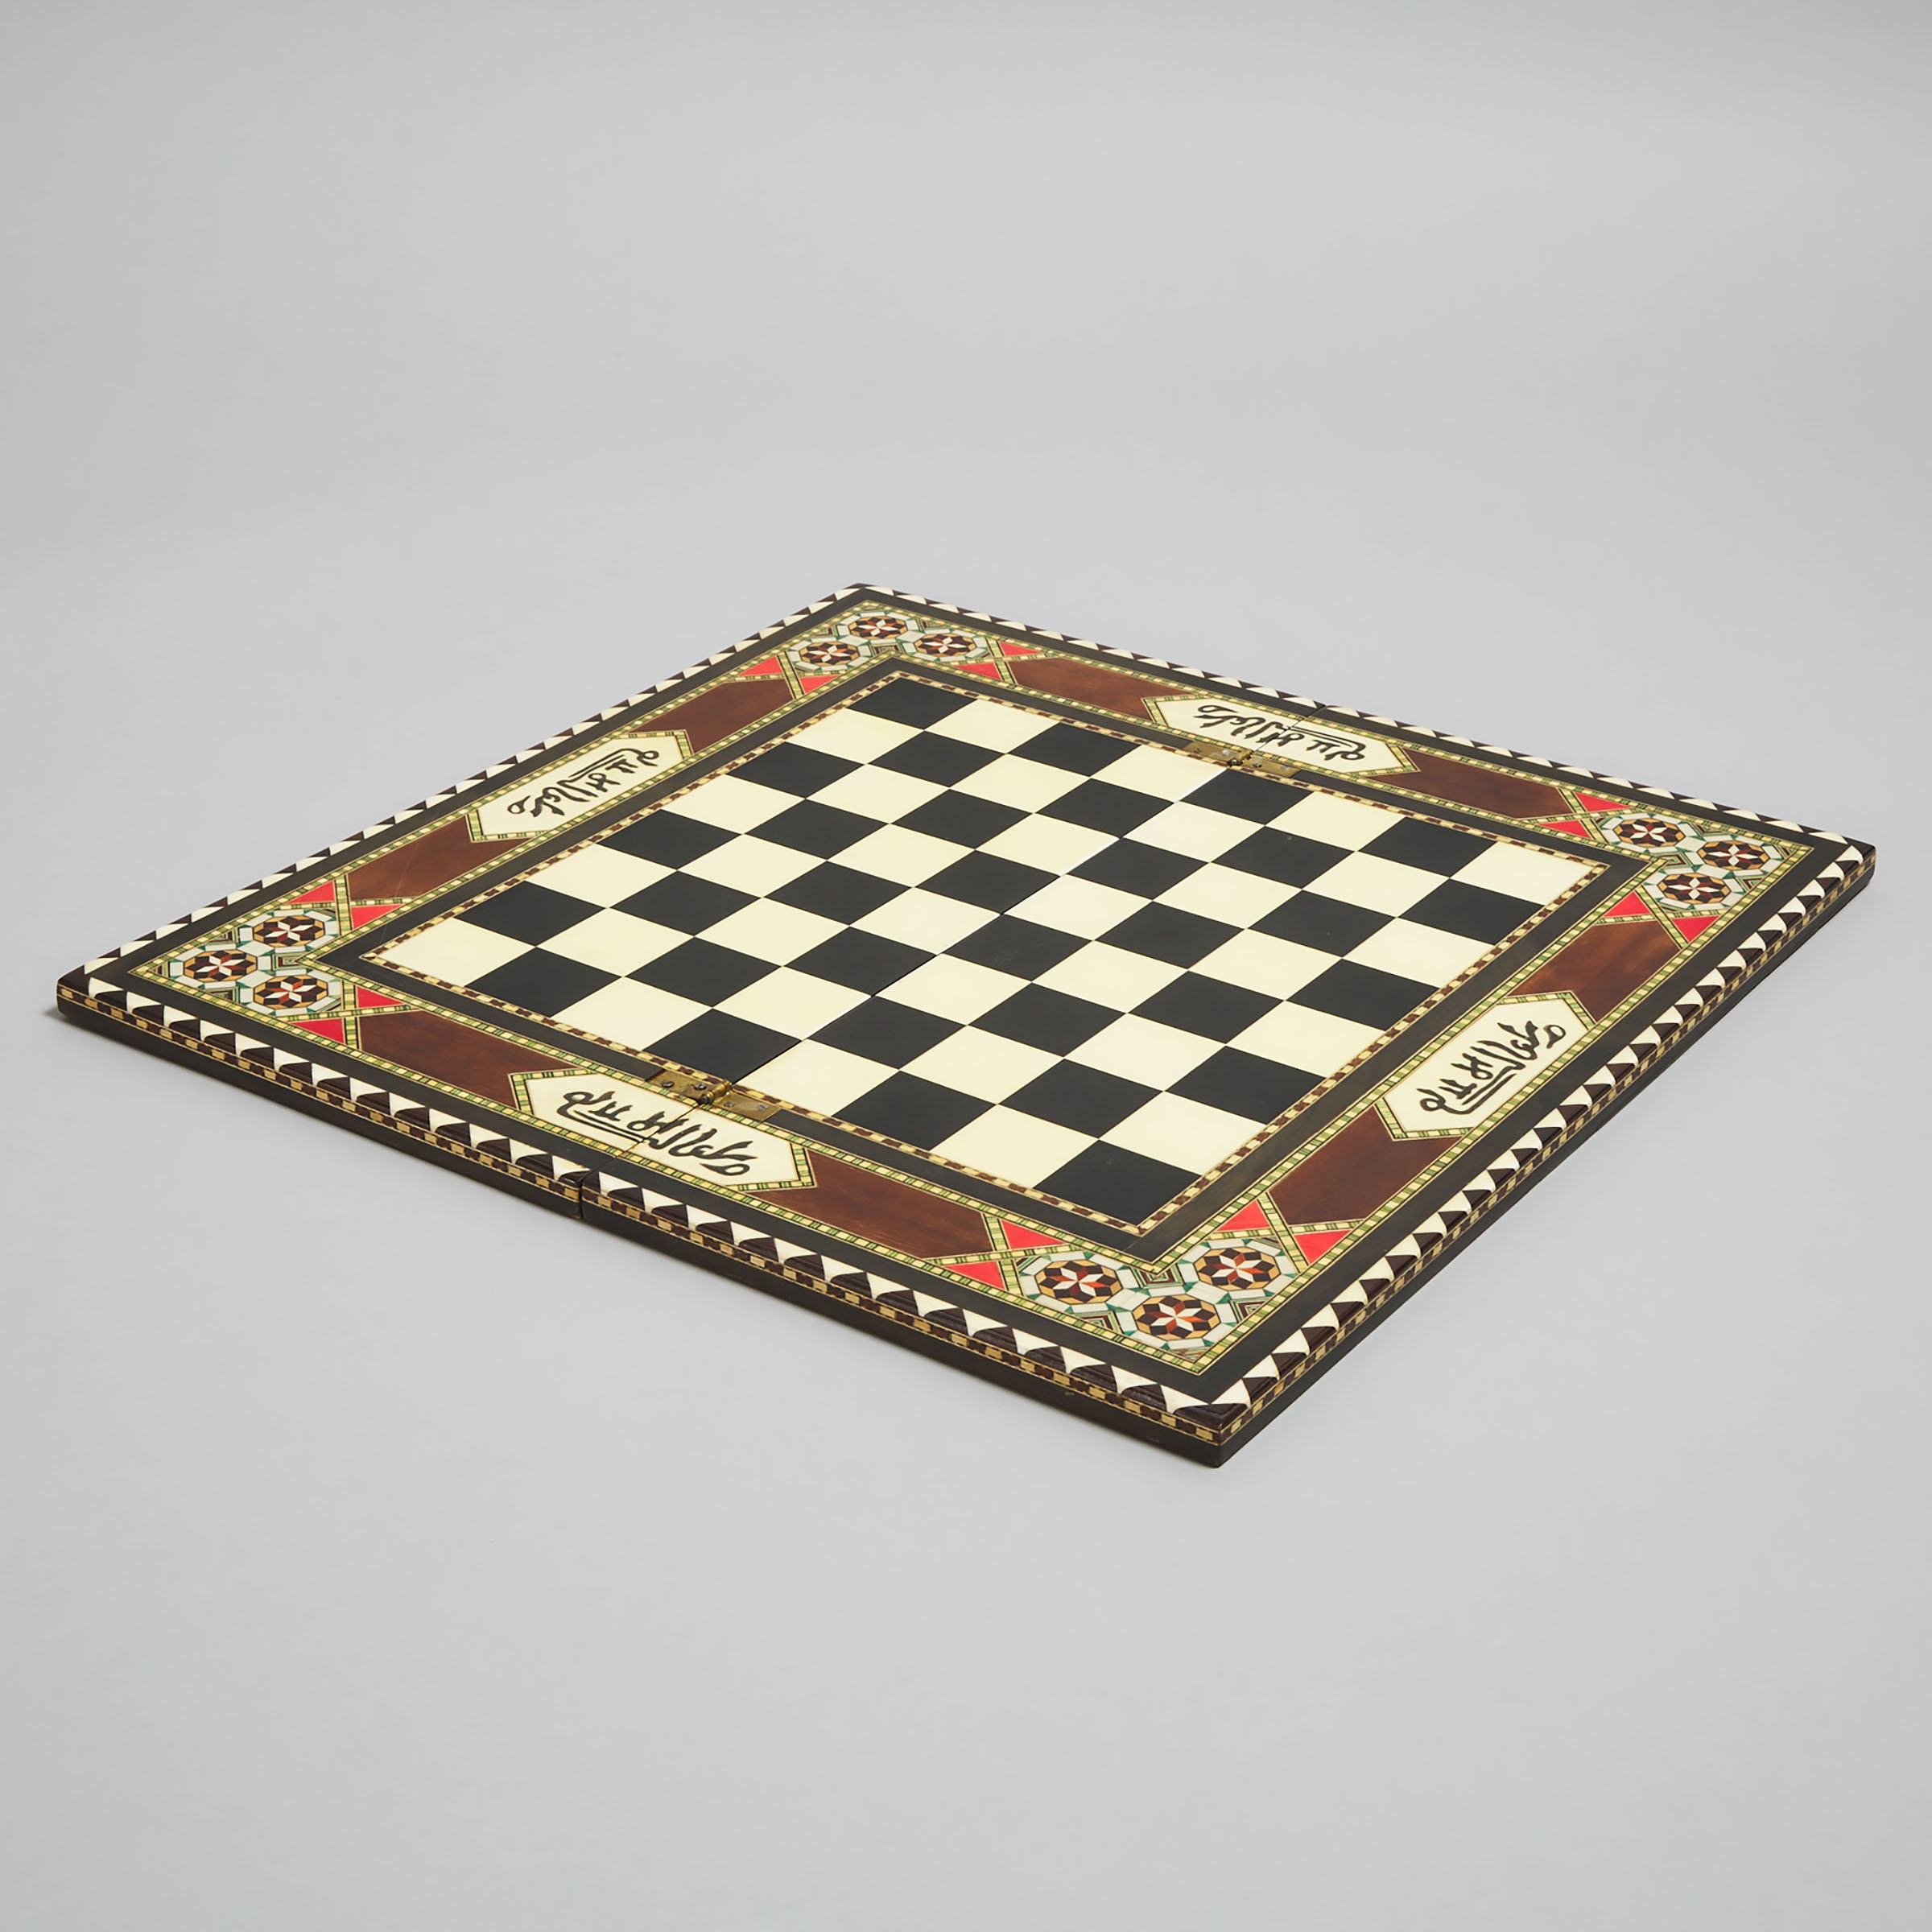 Turko-Persian Inlaid Mixed Wood Folding Chess Board, mid-late 20th century